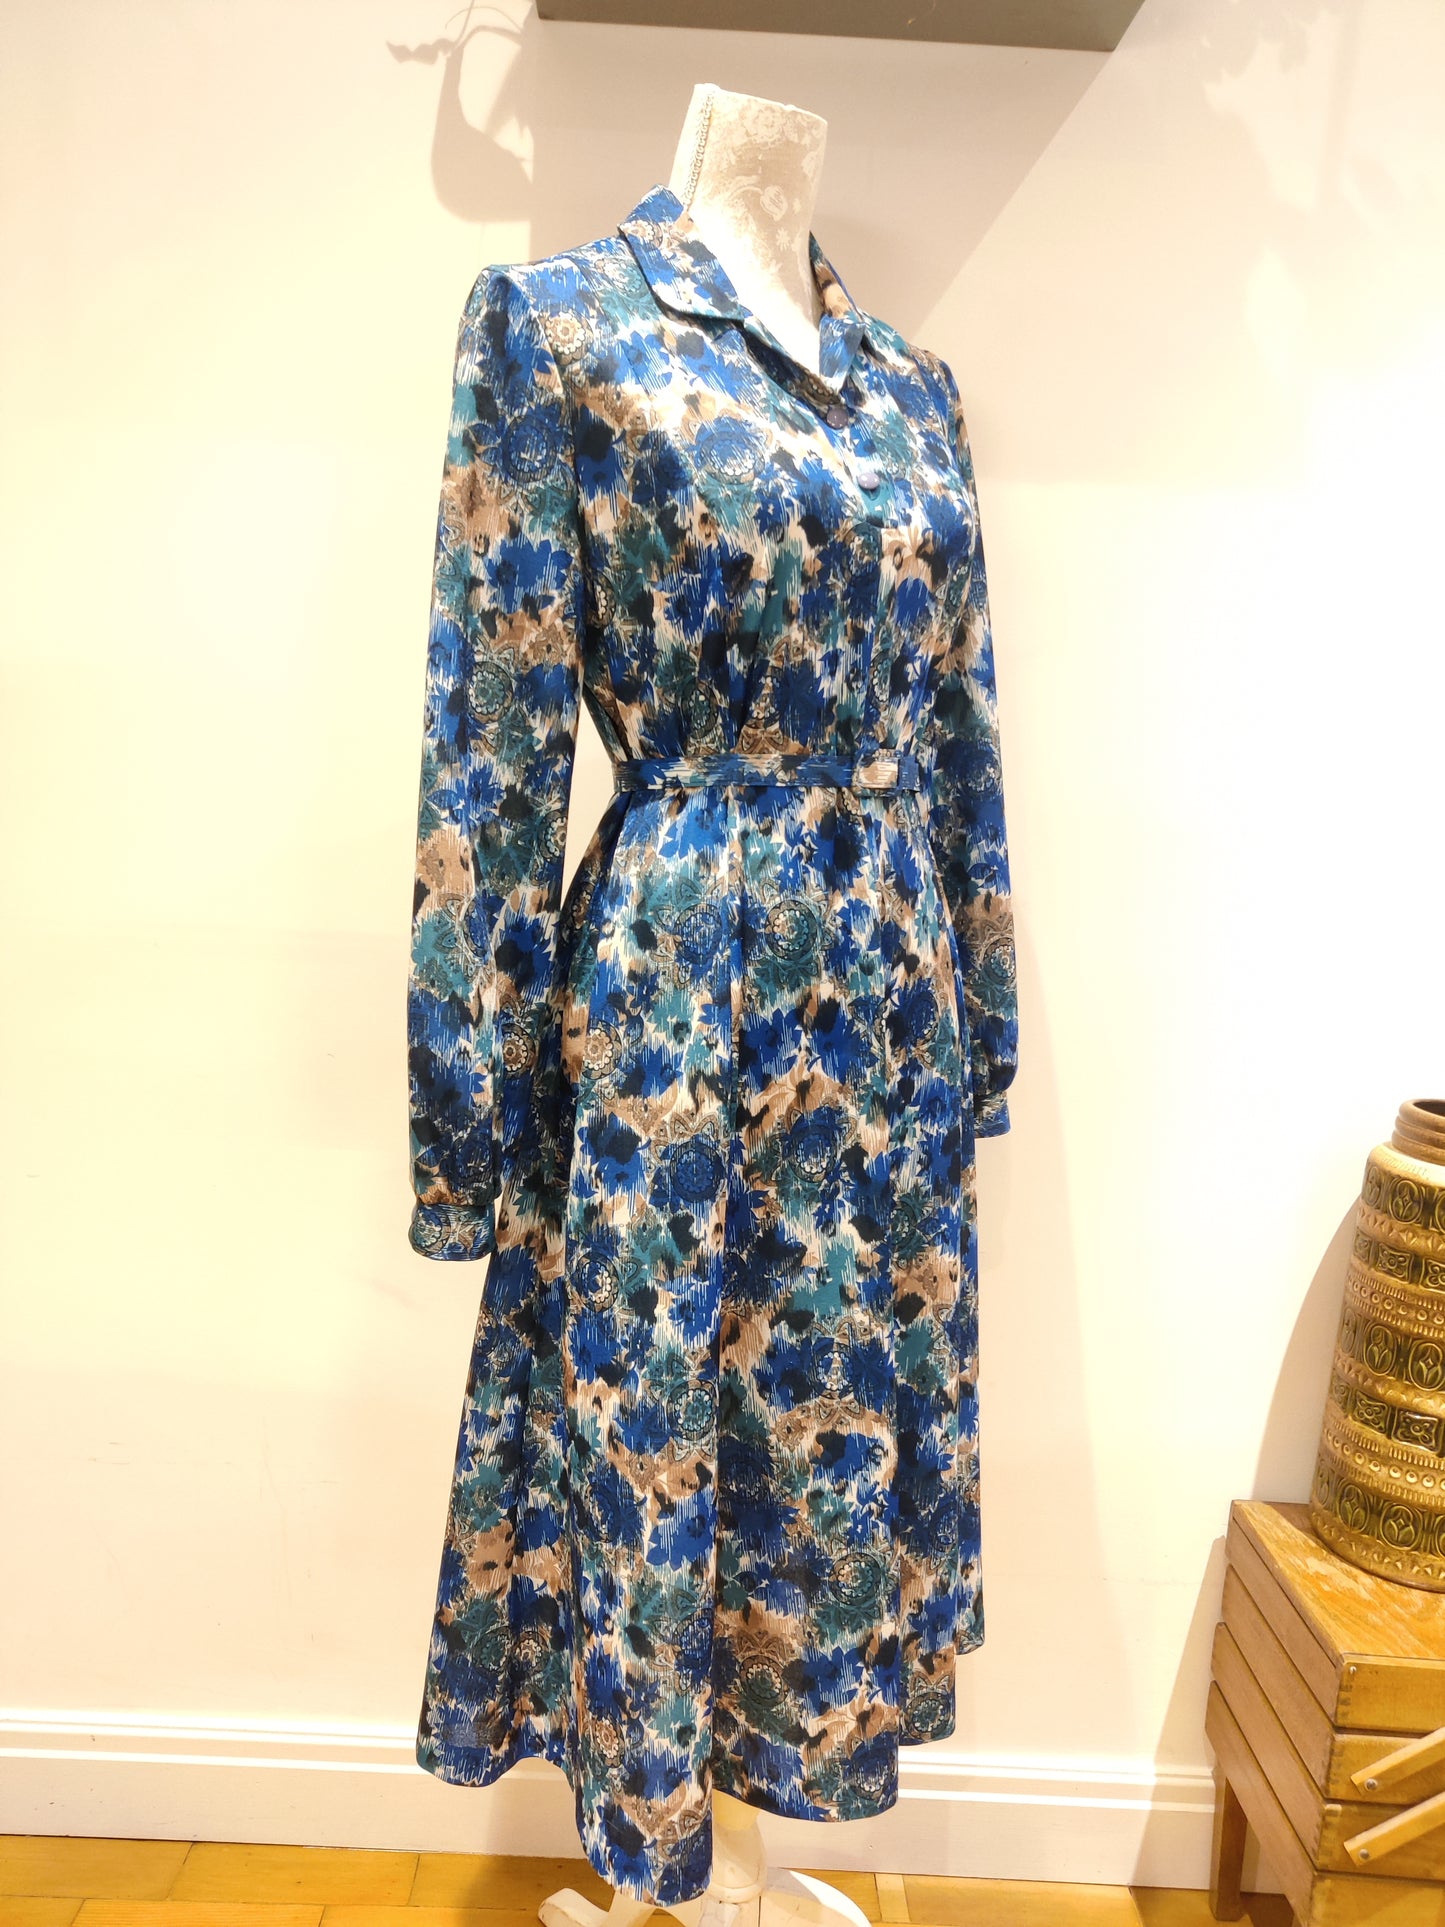 Stunning vintage midi dress in blue floral print. 18.